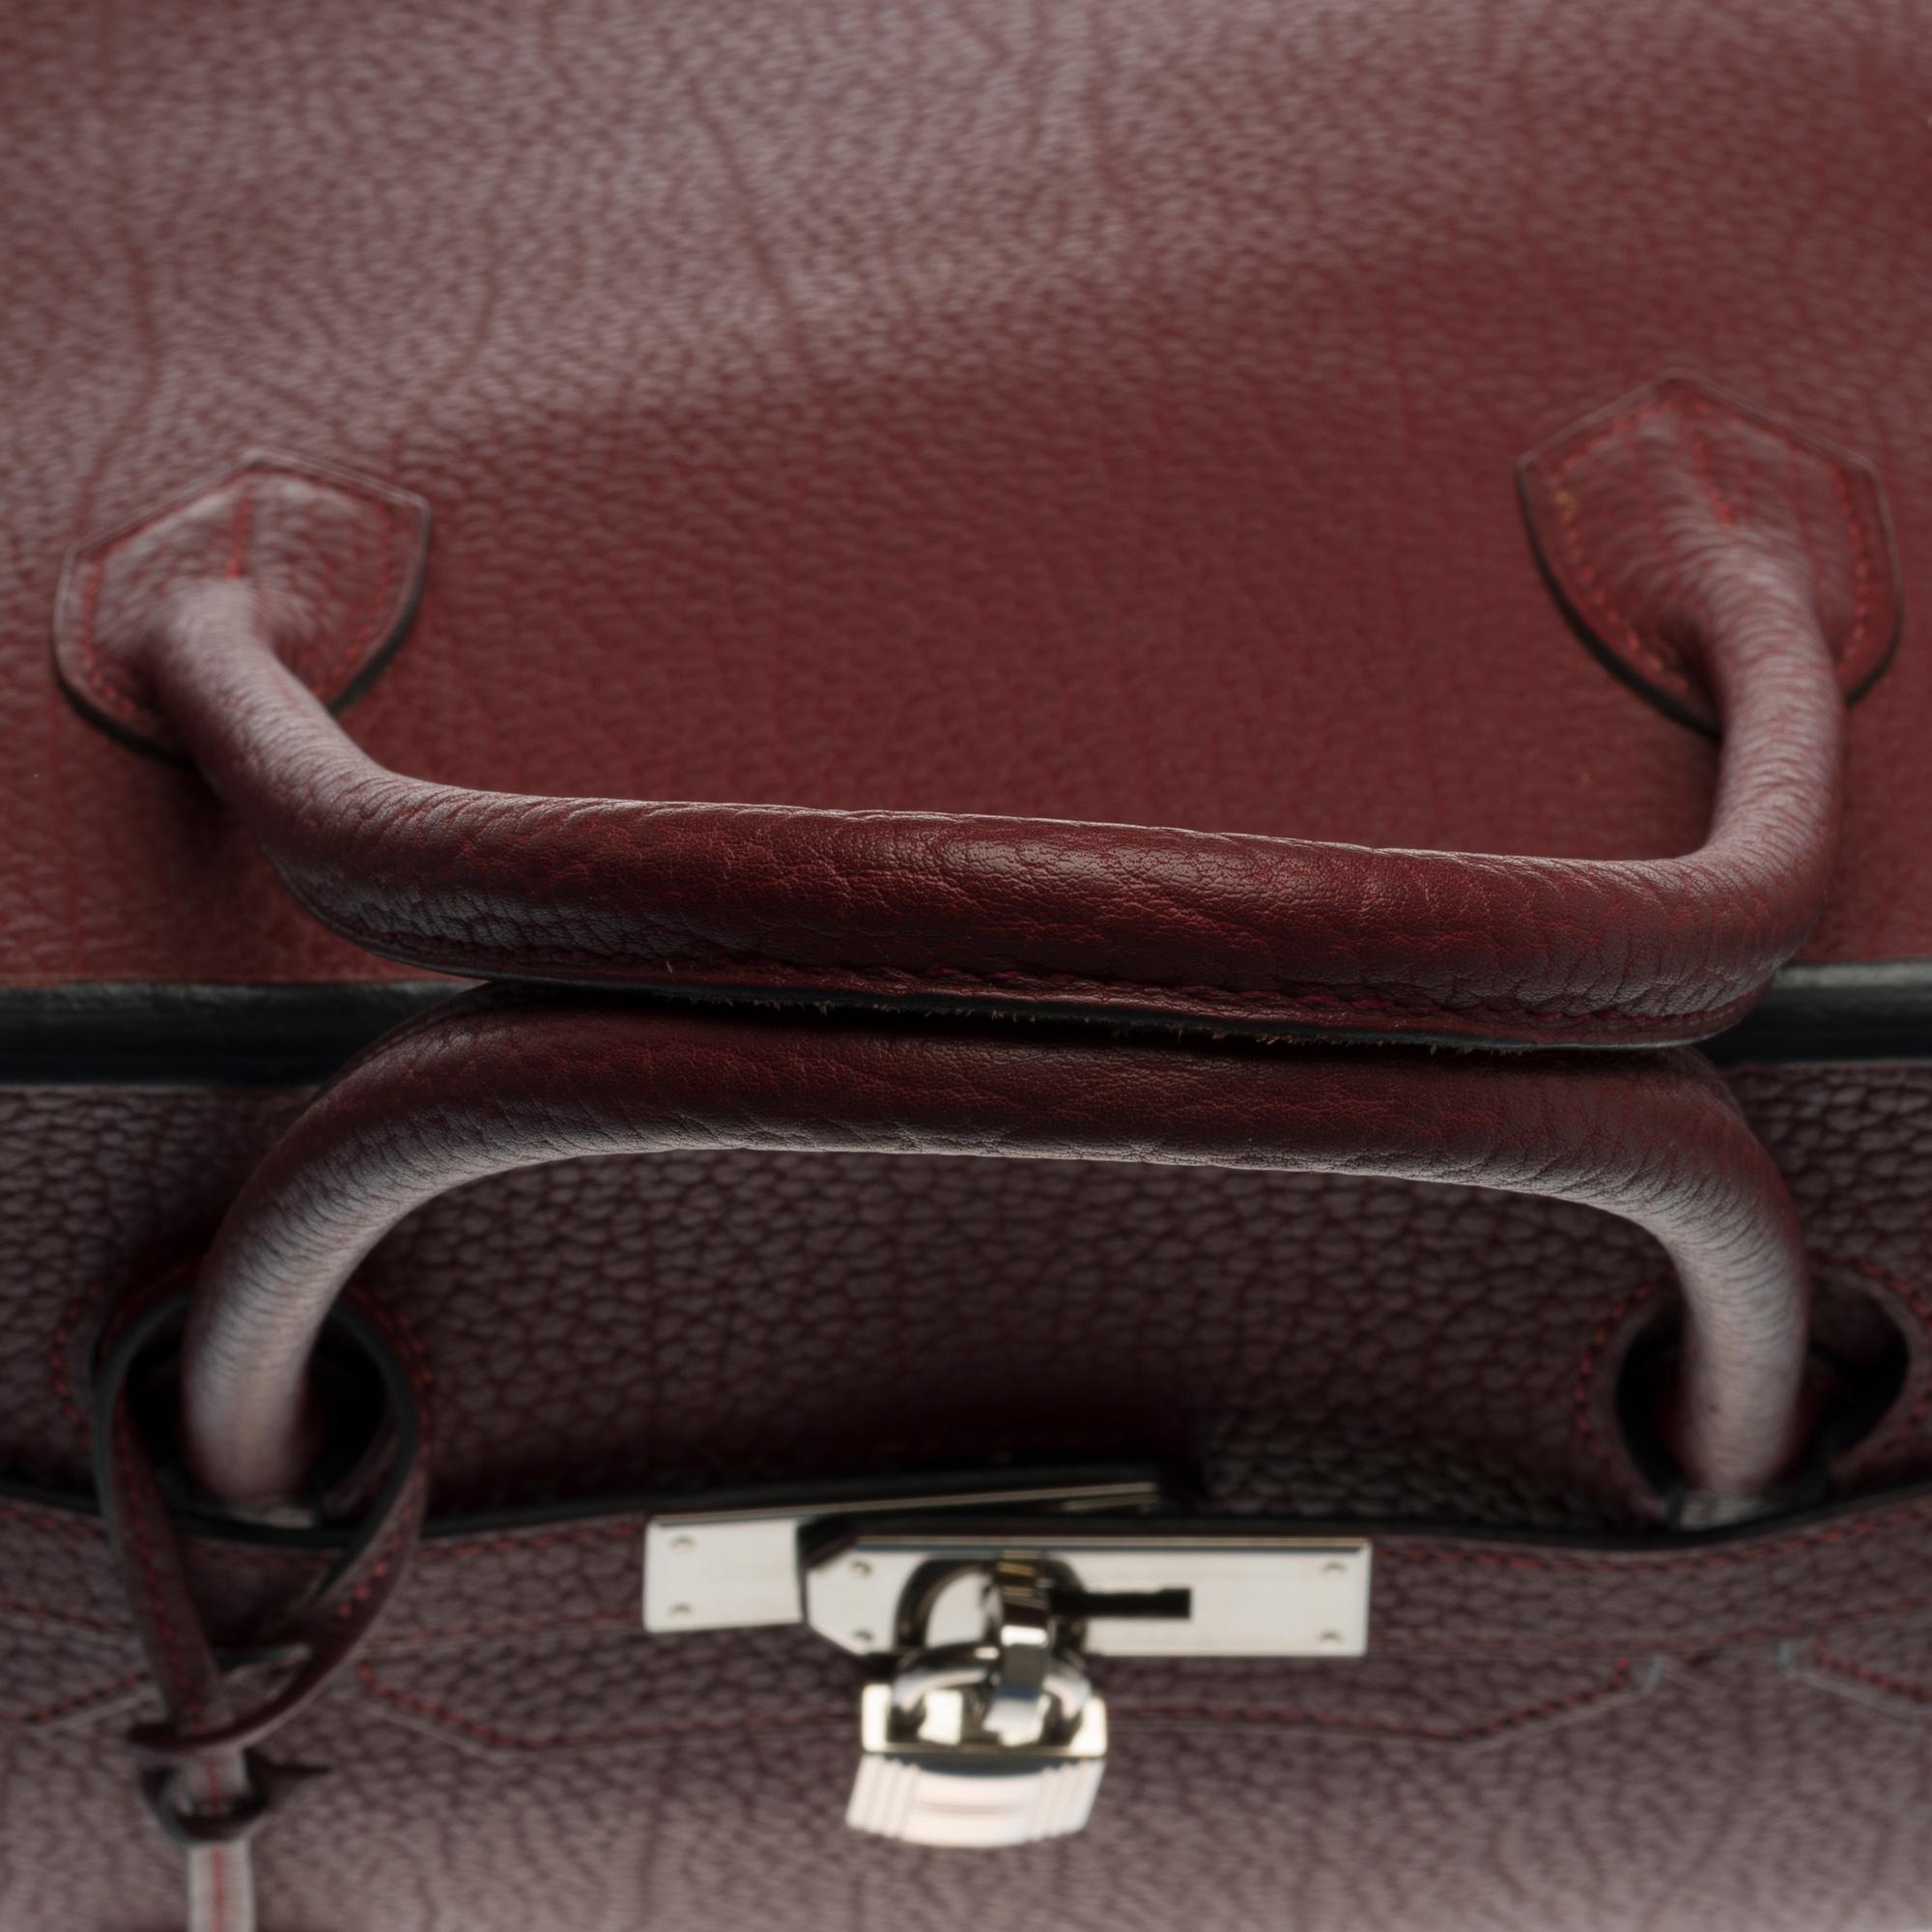 Stunning Hermes Birkin 40cm handbag in burgundy Fjord leather, silver hardware 3